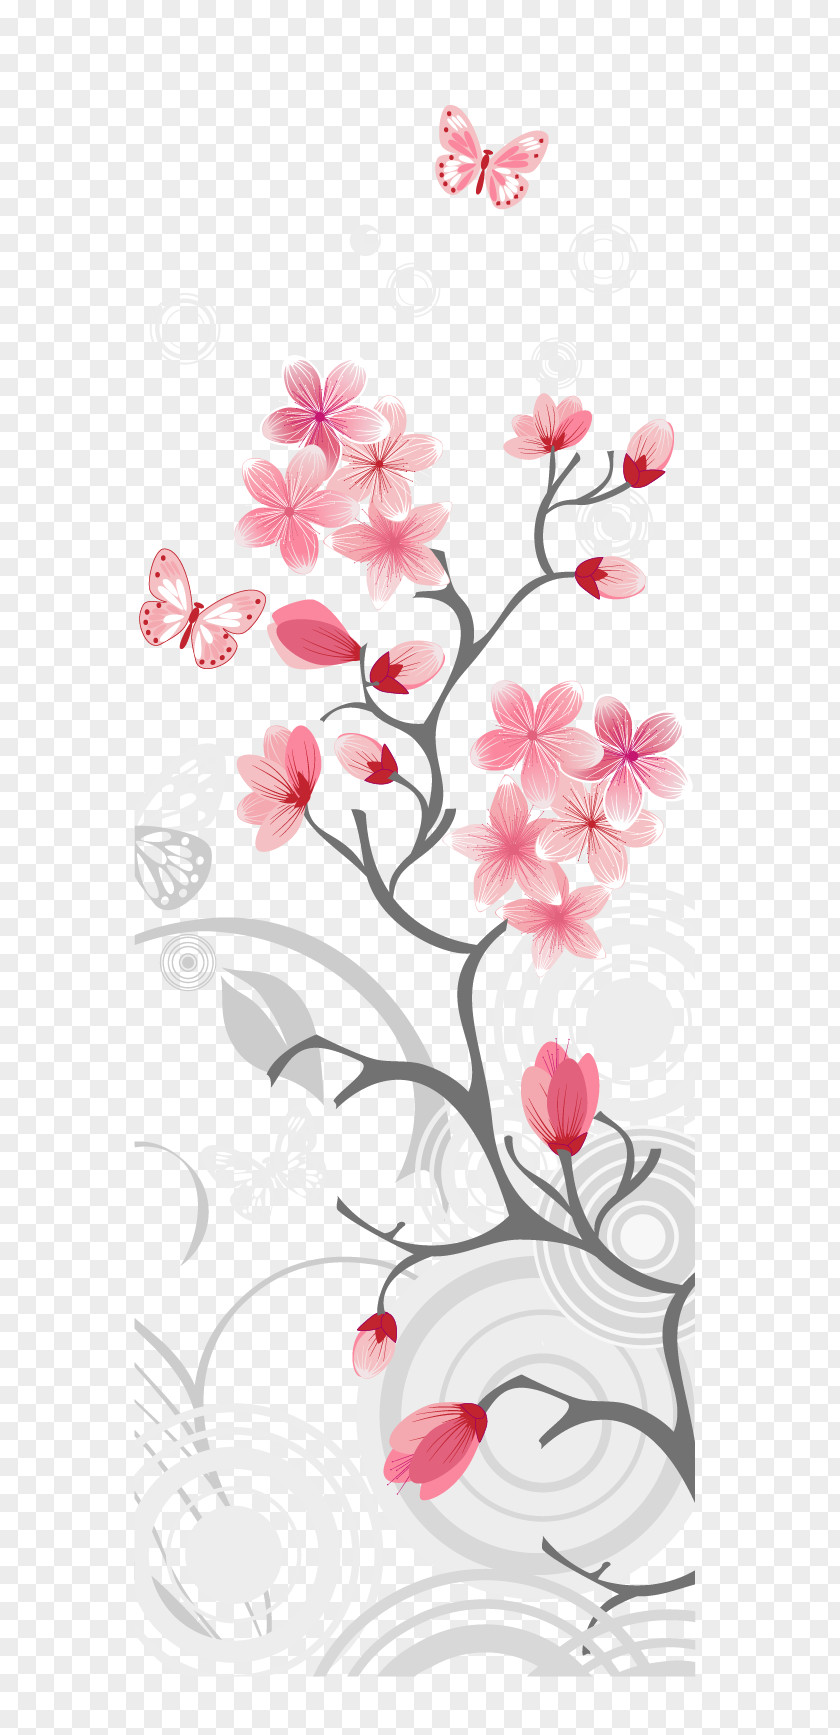 Cherry Blossom Branch Petals Illustration PNG